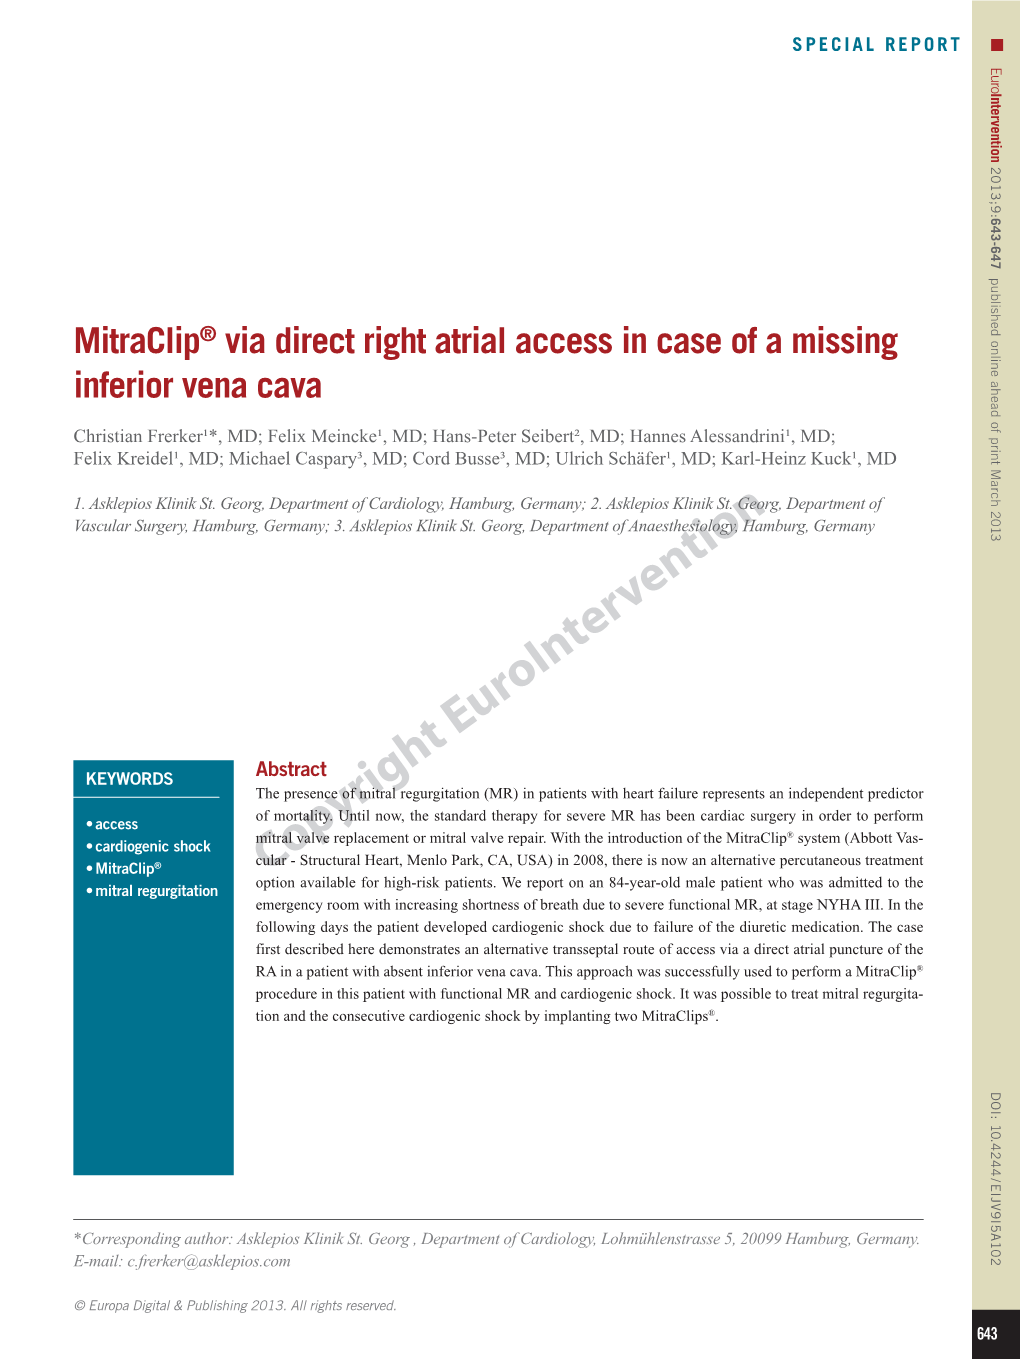 Mitraclip® Via Direct Right Atrial Access in Case of a Missing Inferior Vena Cava